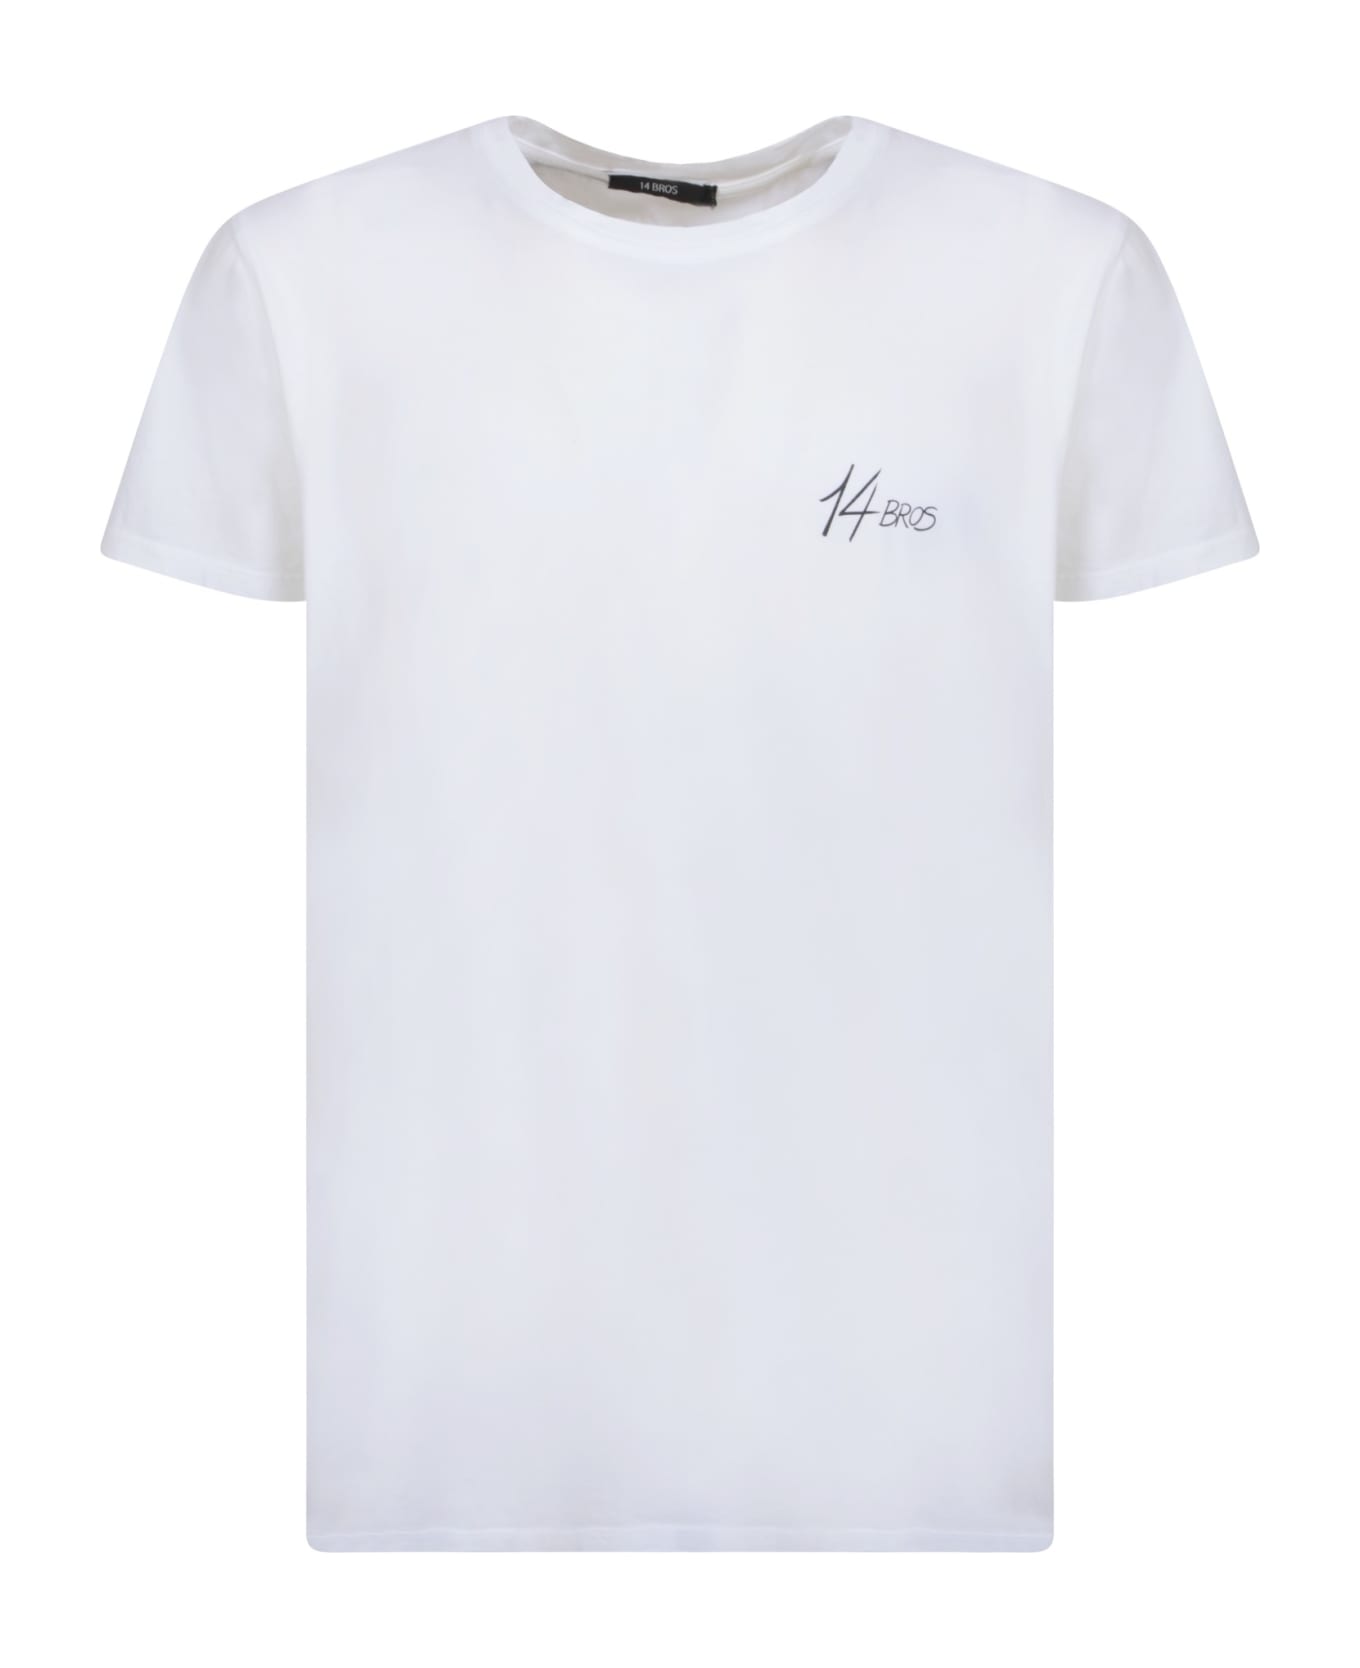 14 Bros Logo White T-shirt - White シャツ